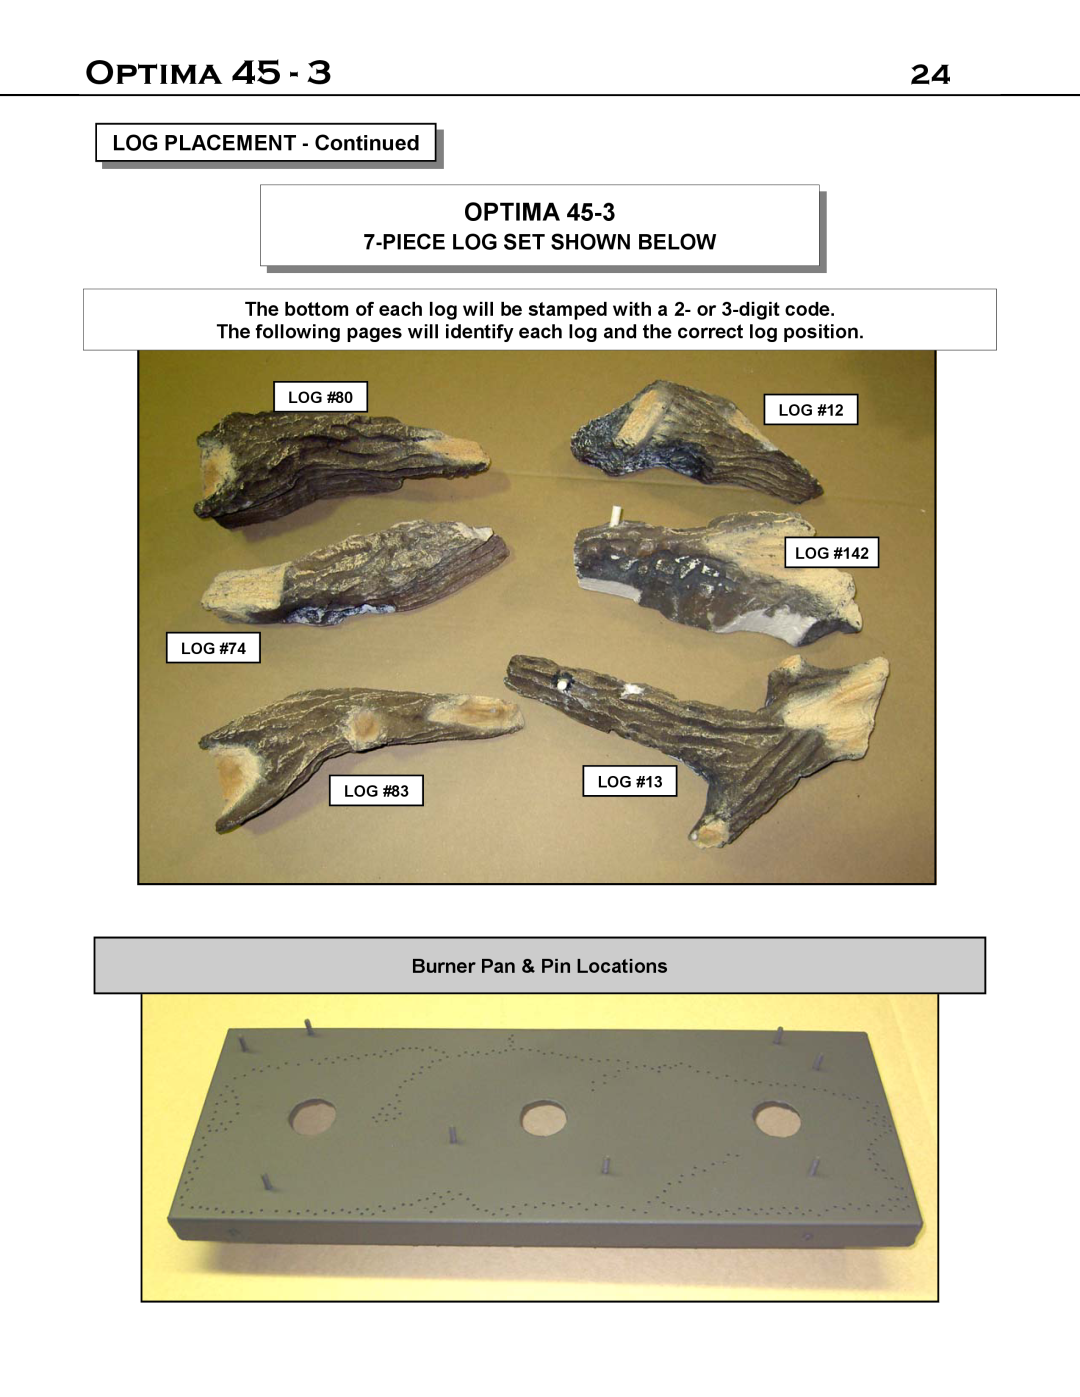 Optima Company 45 - 3 manual Optima, LOG PLACEMENT - Continued, Piecelog Set Shown Below, Burner Pan & Pin Locations 